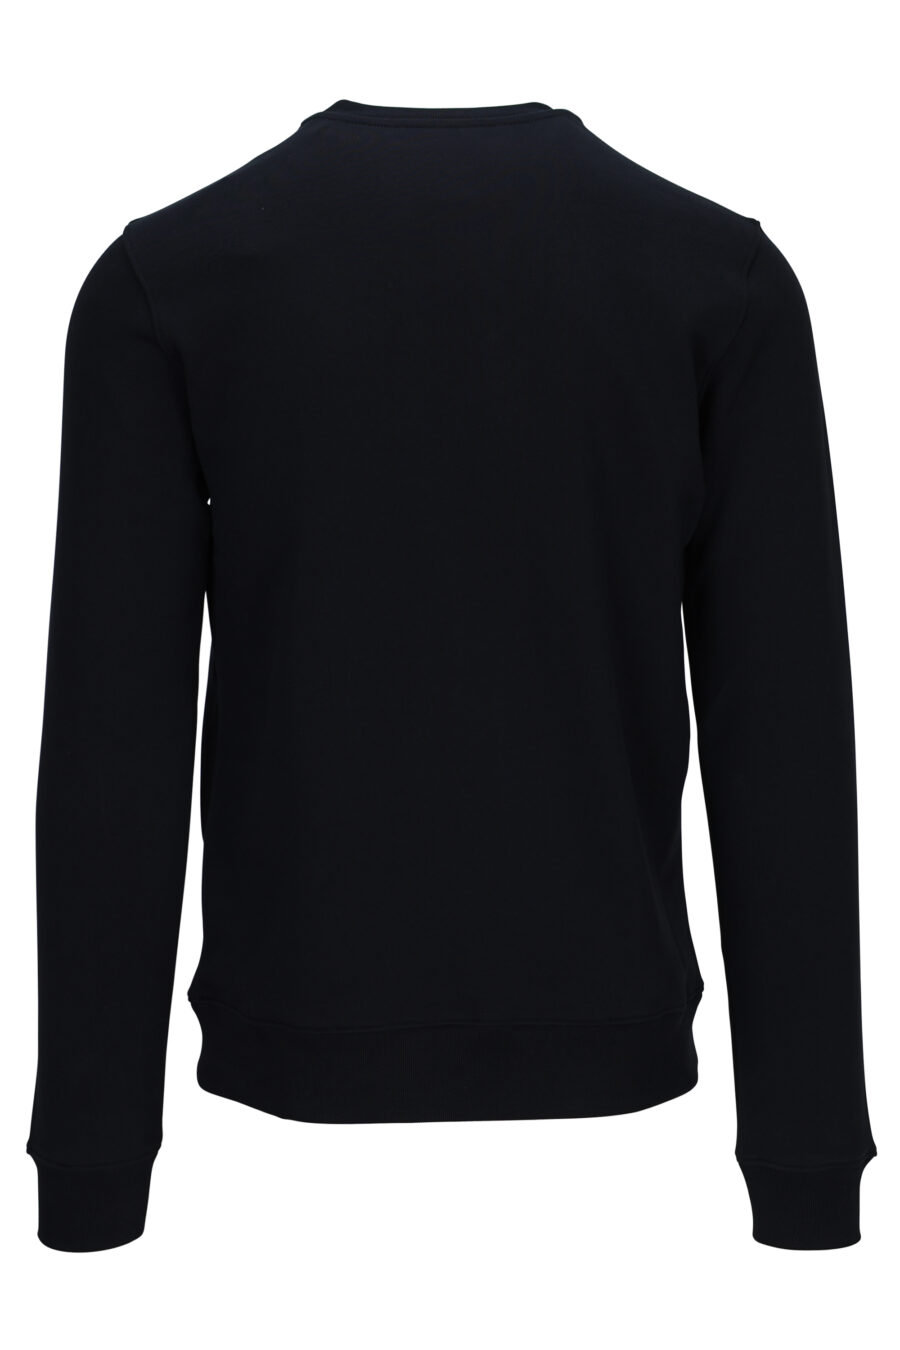 Black sweatshirt with logo "teddy tailor" - 667113108247 1